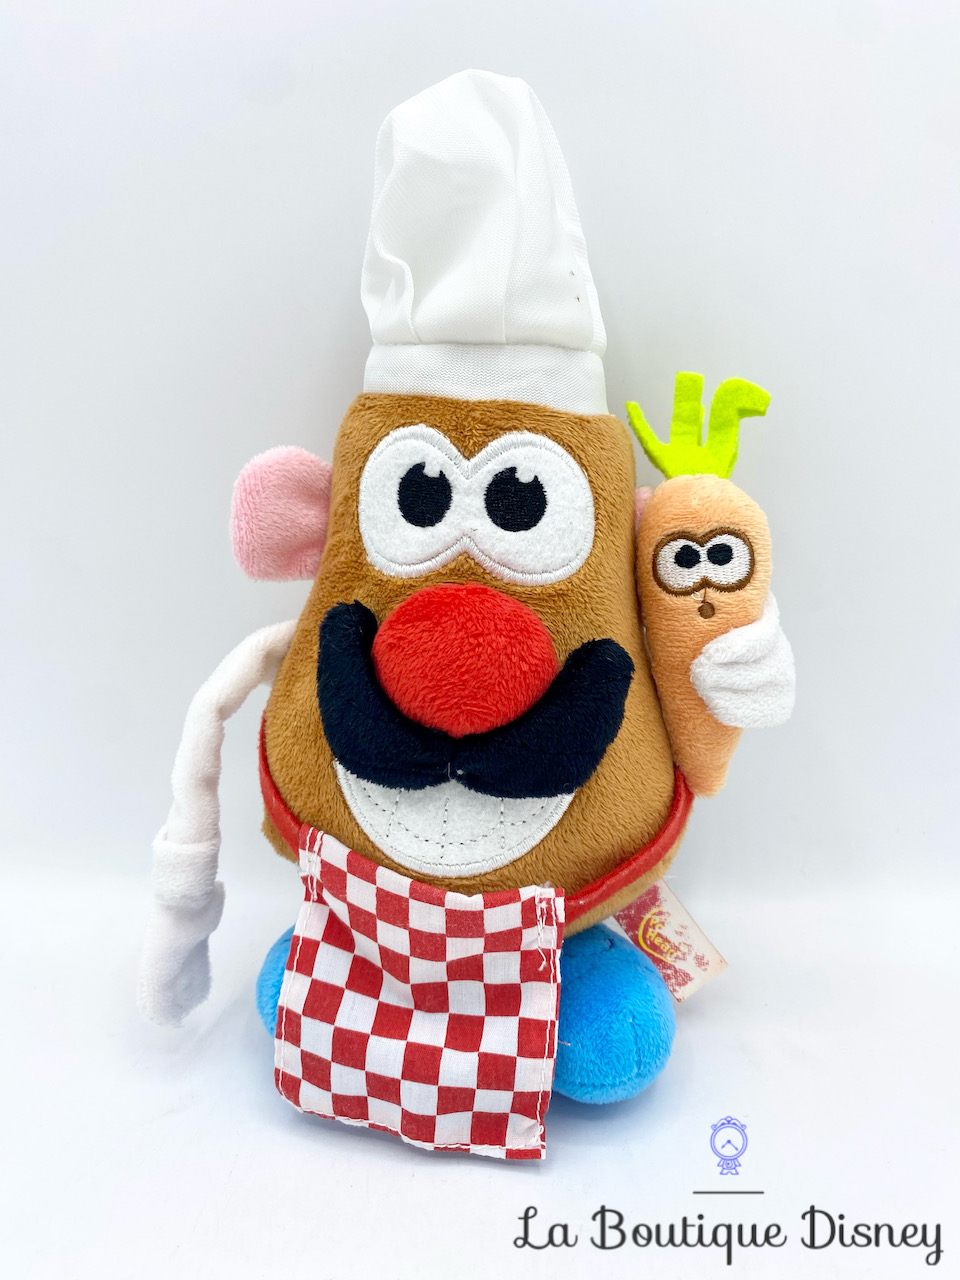 Peluche Monsieur Patate Cuisinier Toy Story Disney Hasbro 2014 Play by Play Mr Potato Head